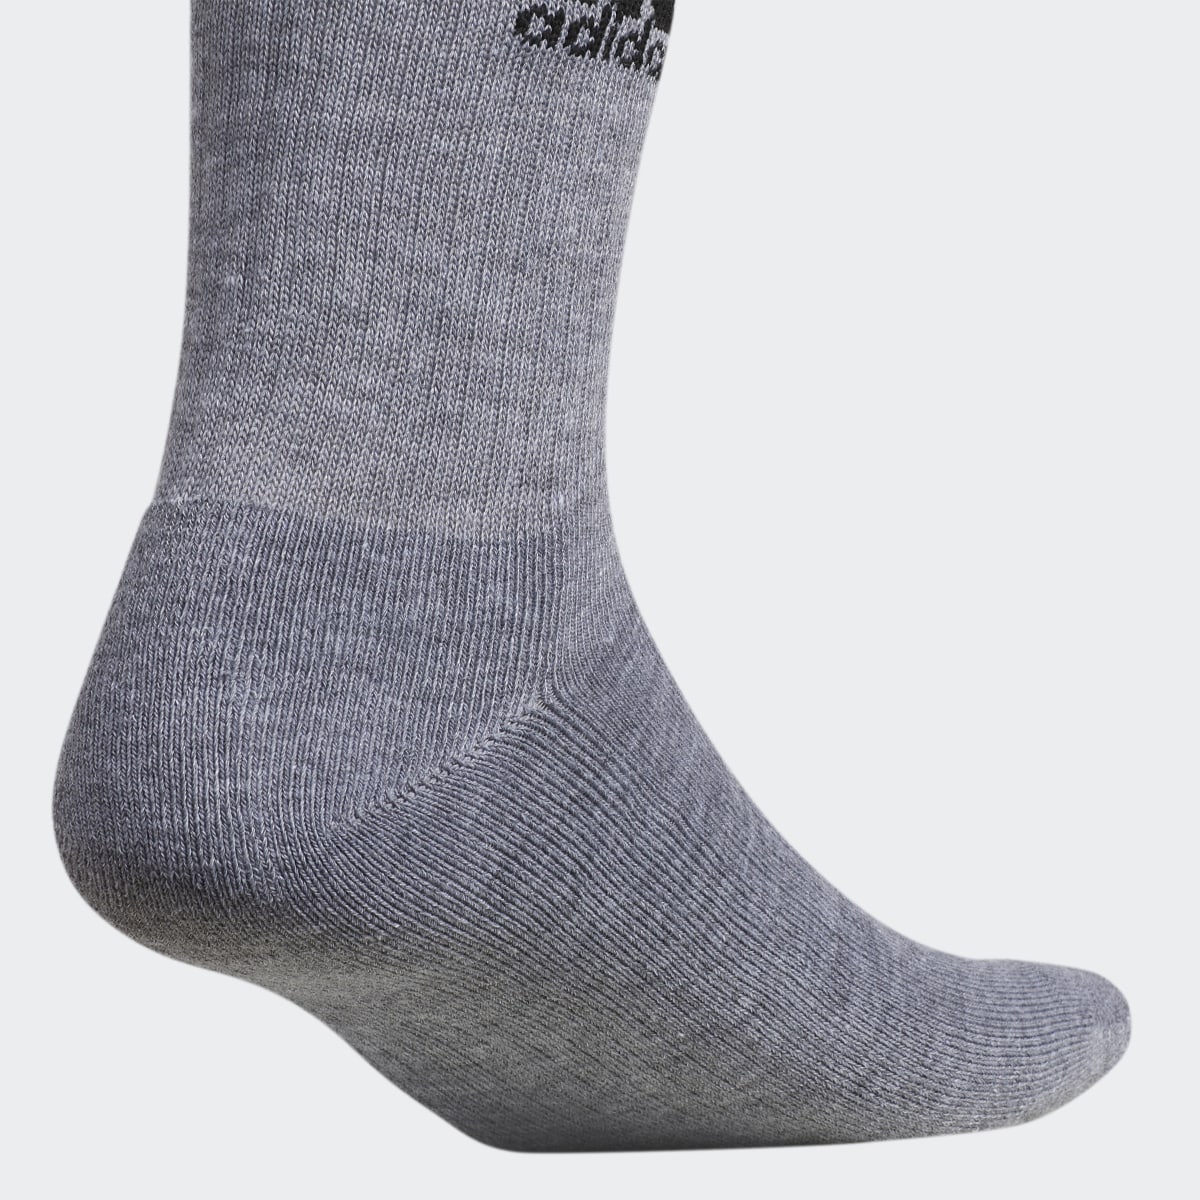 Adidas Cushioned Mixed Crew Socks 6 Pairs. 5